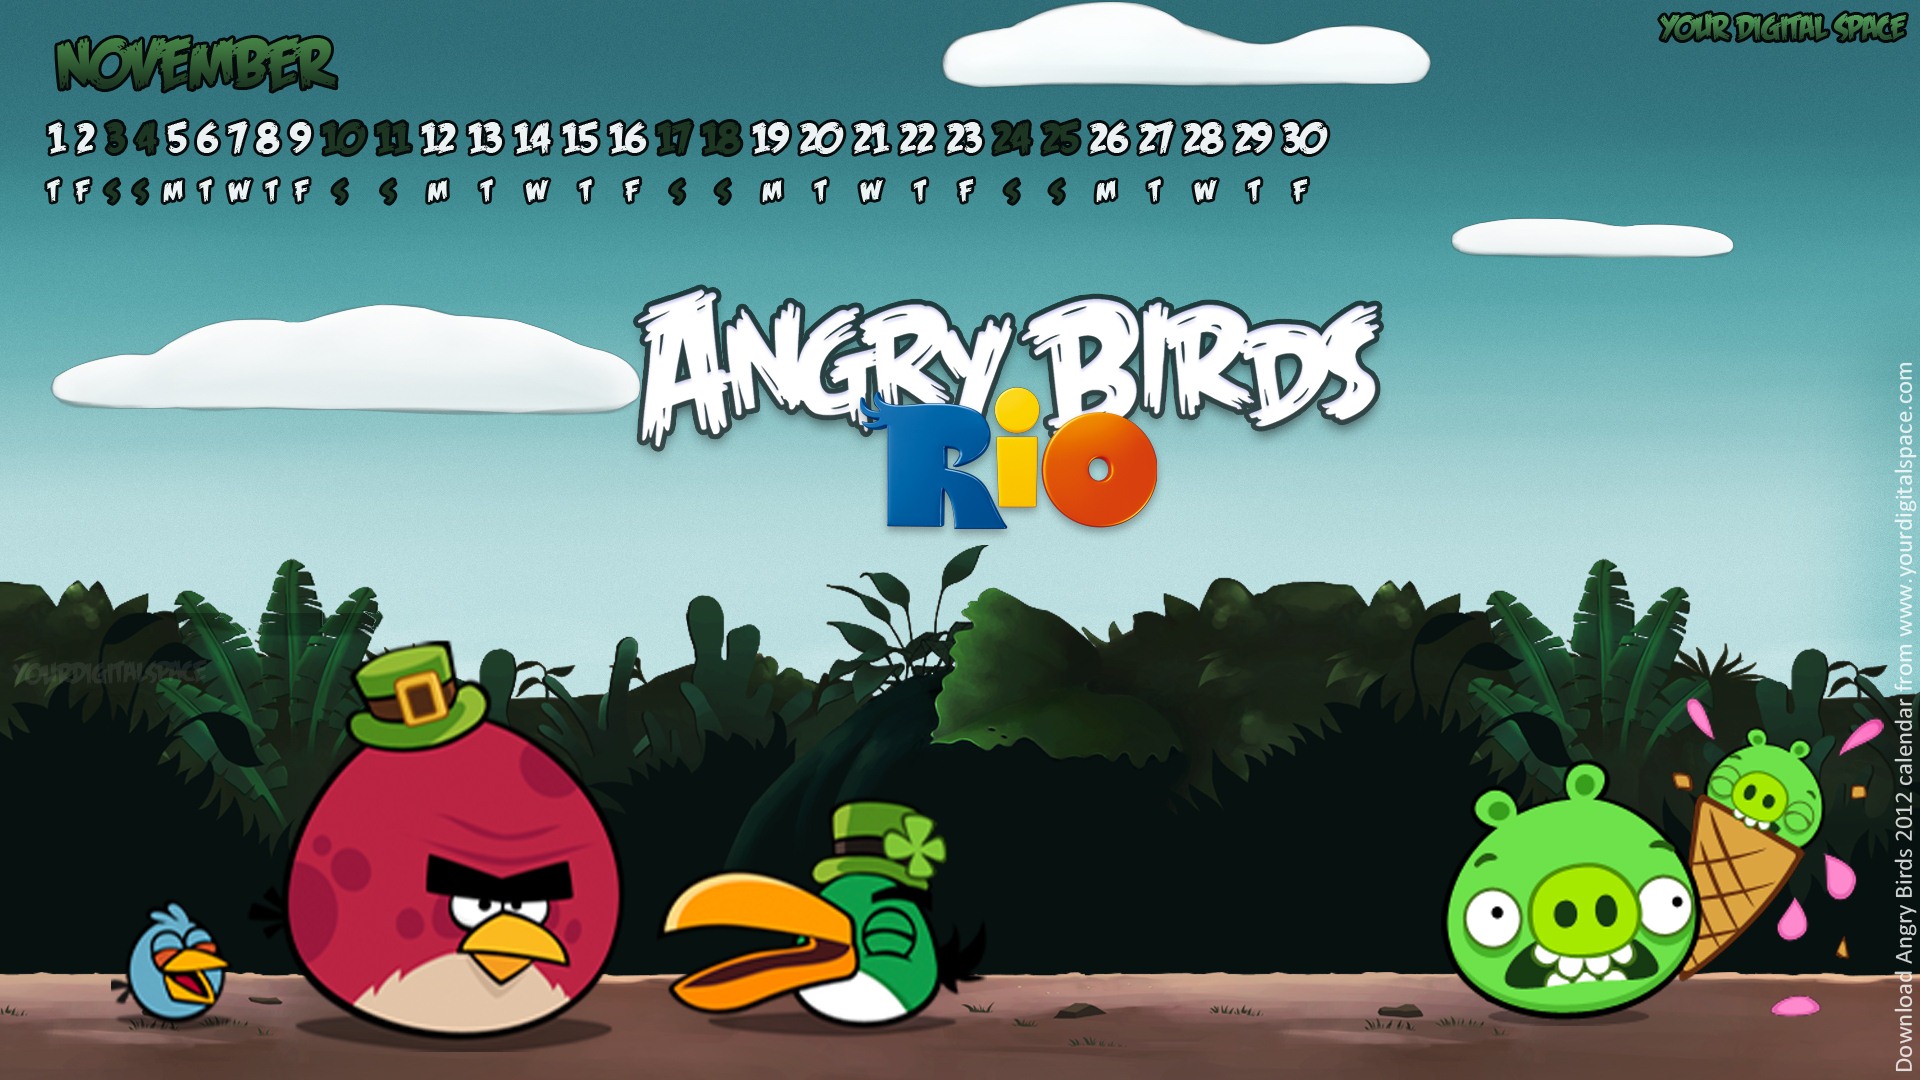 Angry Birds 愤怒的小鸟 2012年年历壁纸10 - 1920x1080